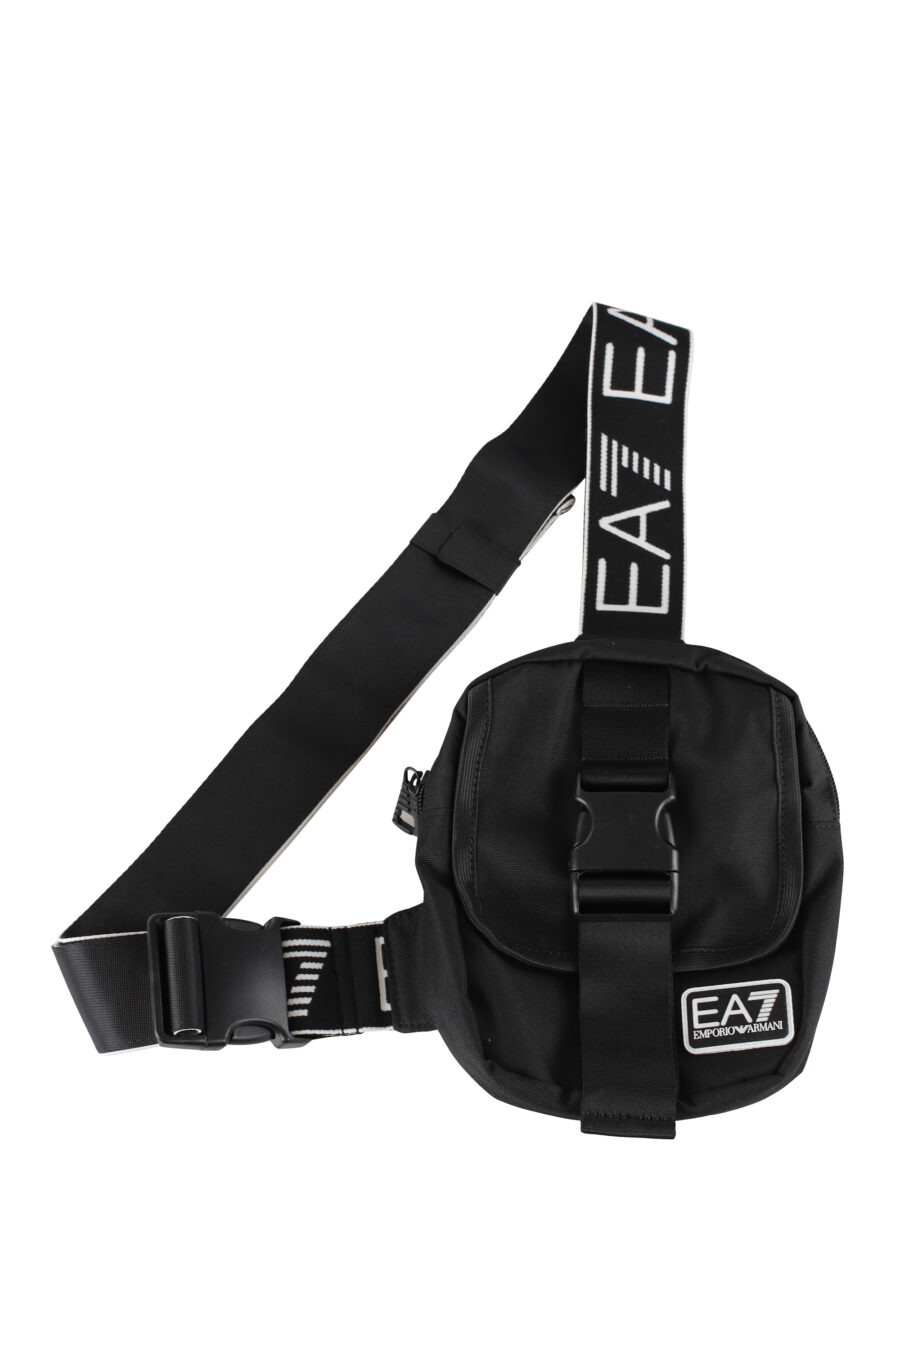 Black crossbody bag with "lux identity" logo on strap - IMG 5142